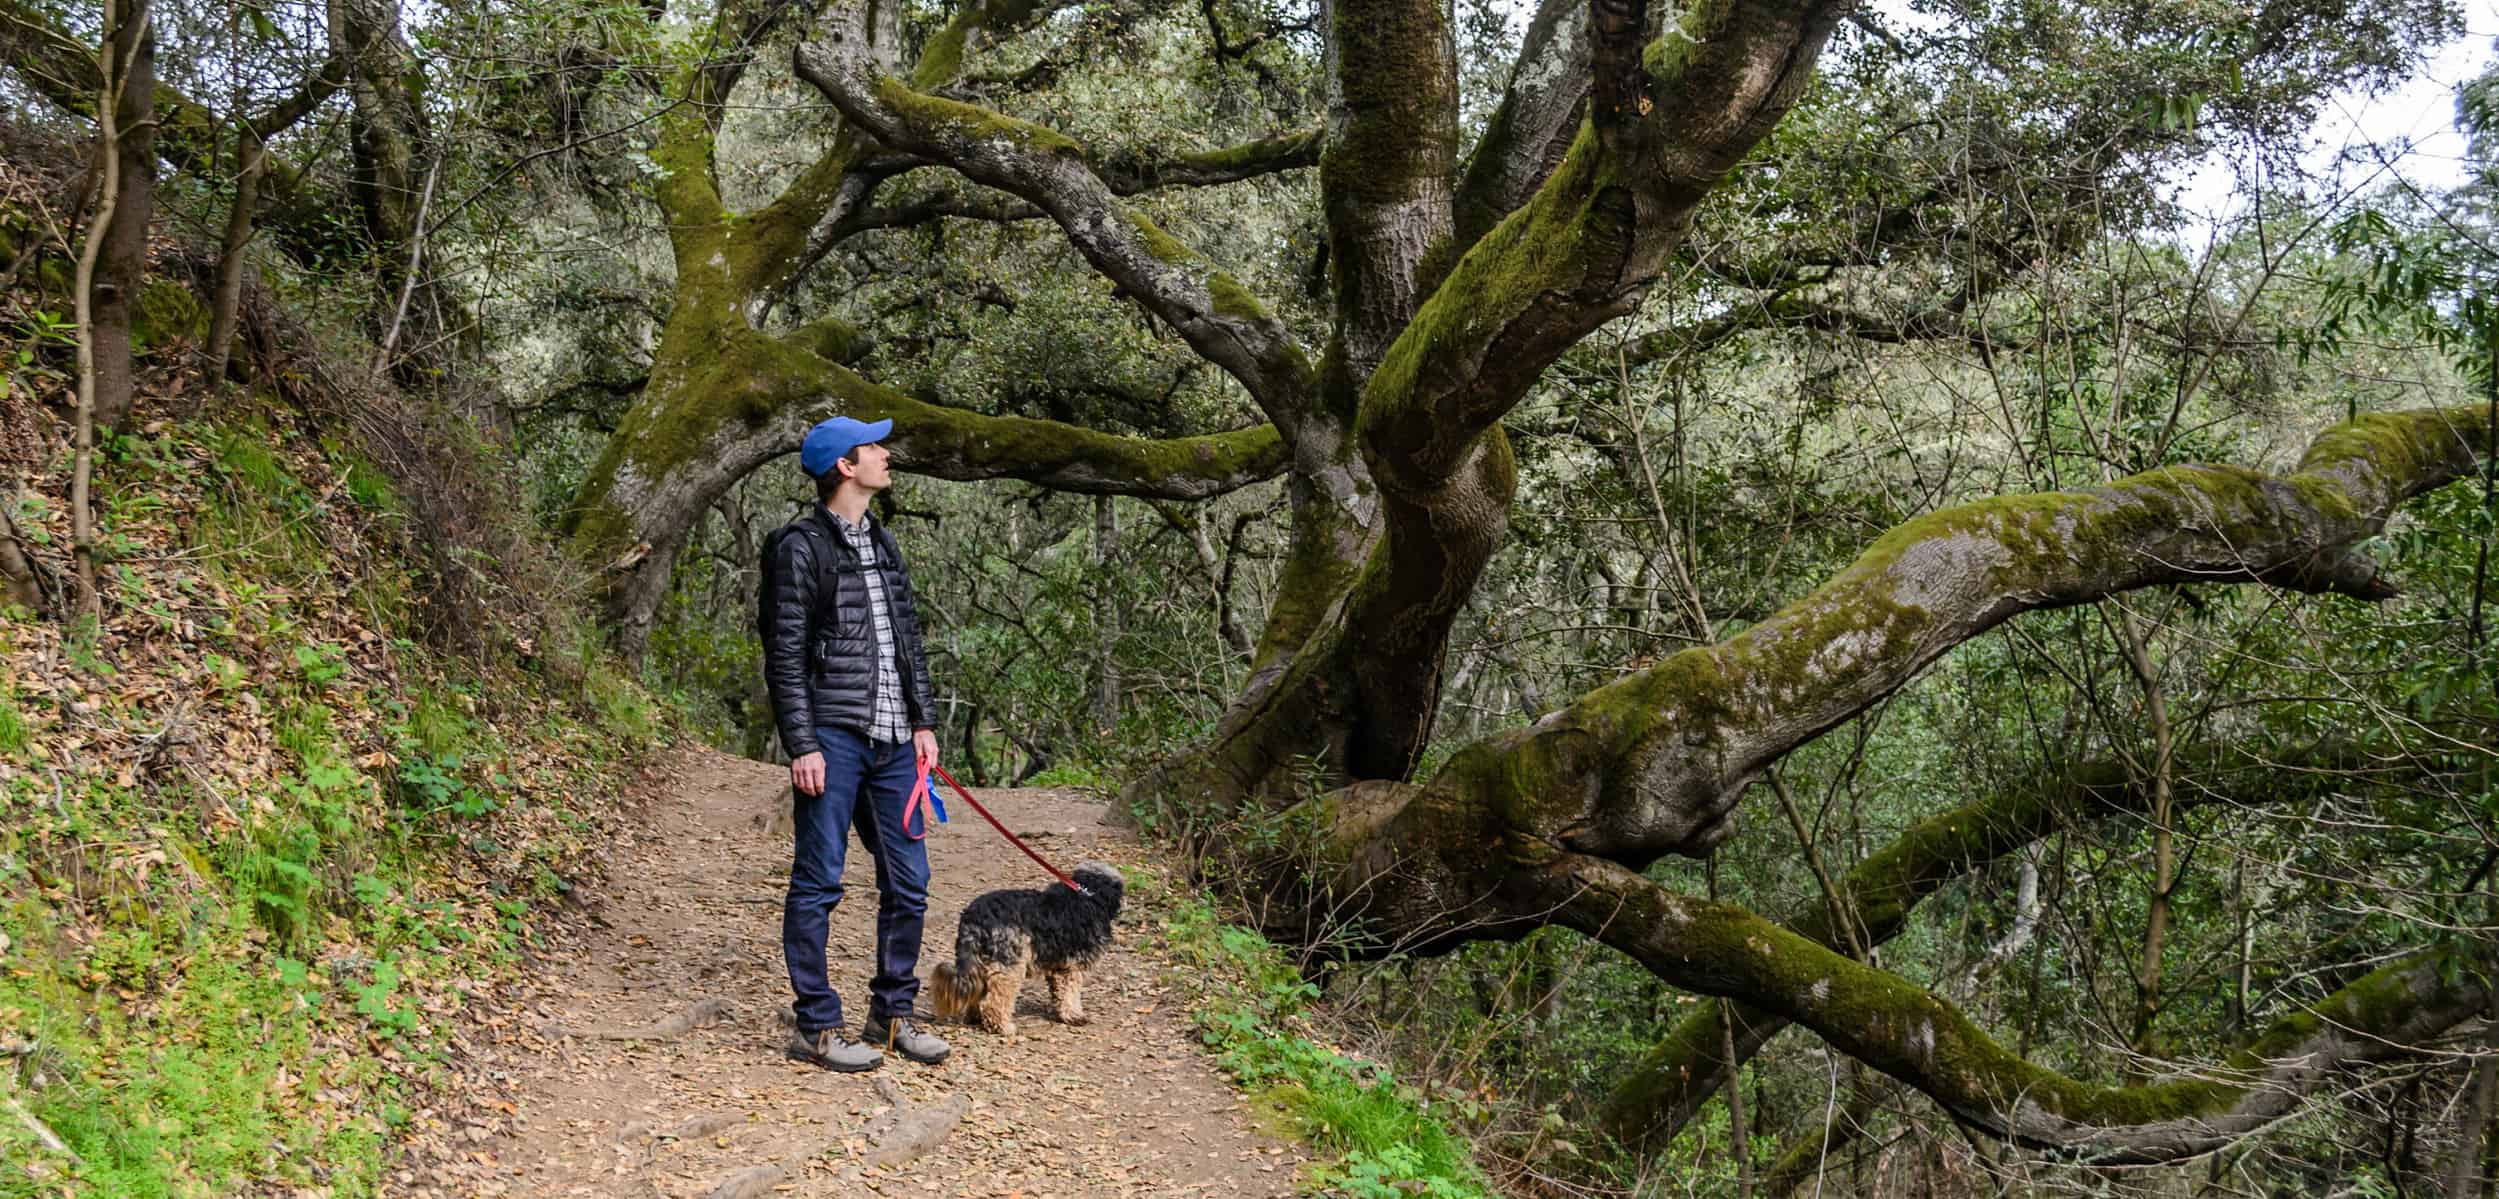 Man walking a dog through a forest in Oakland, California